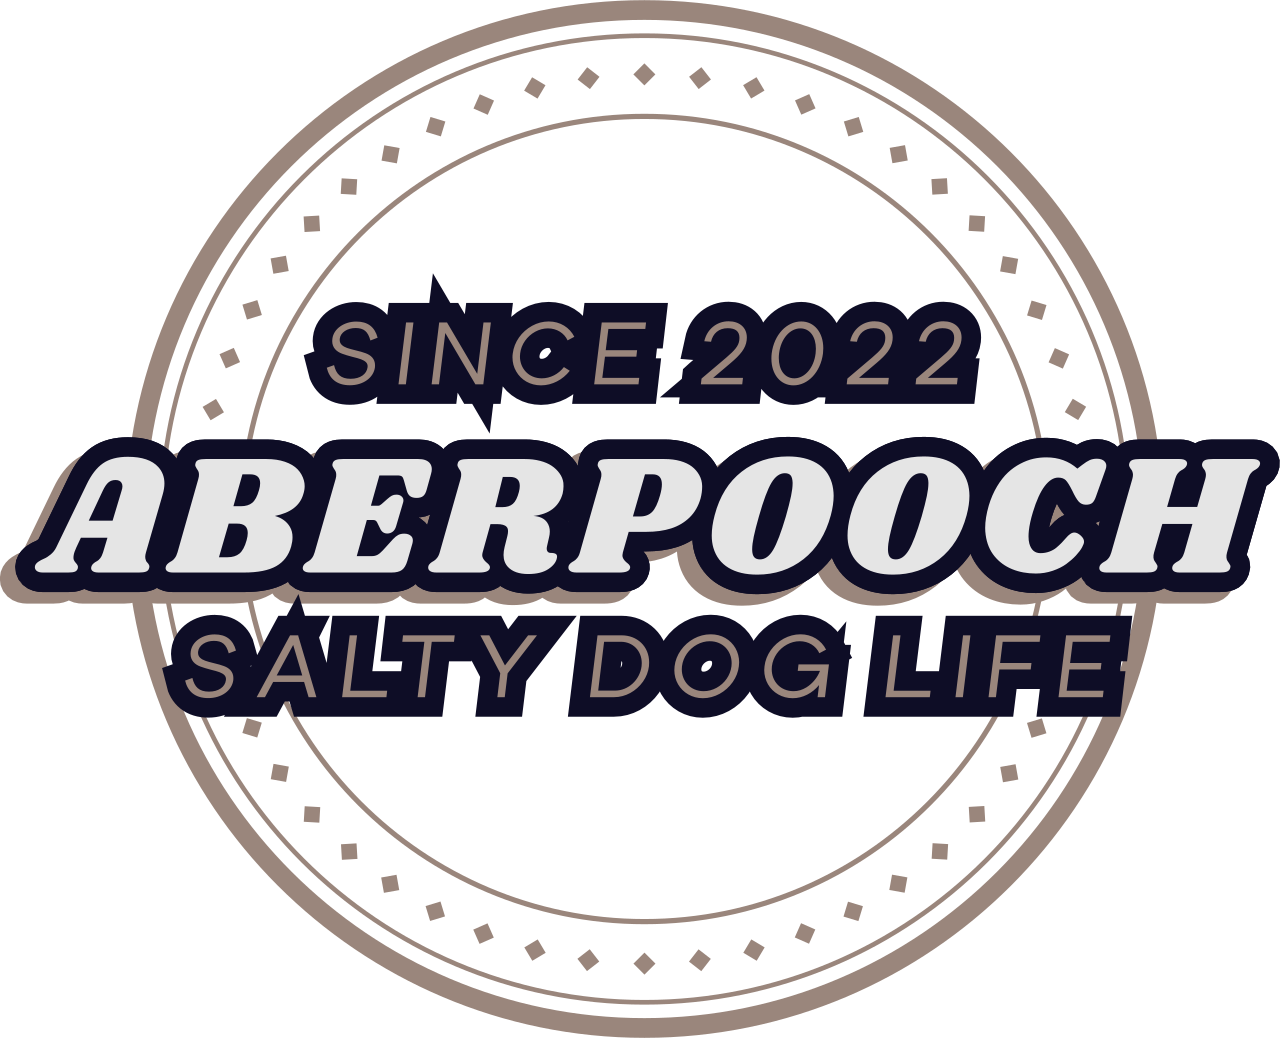 ABERPOOCH's web page